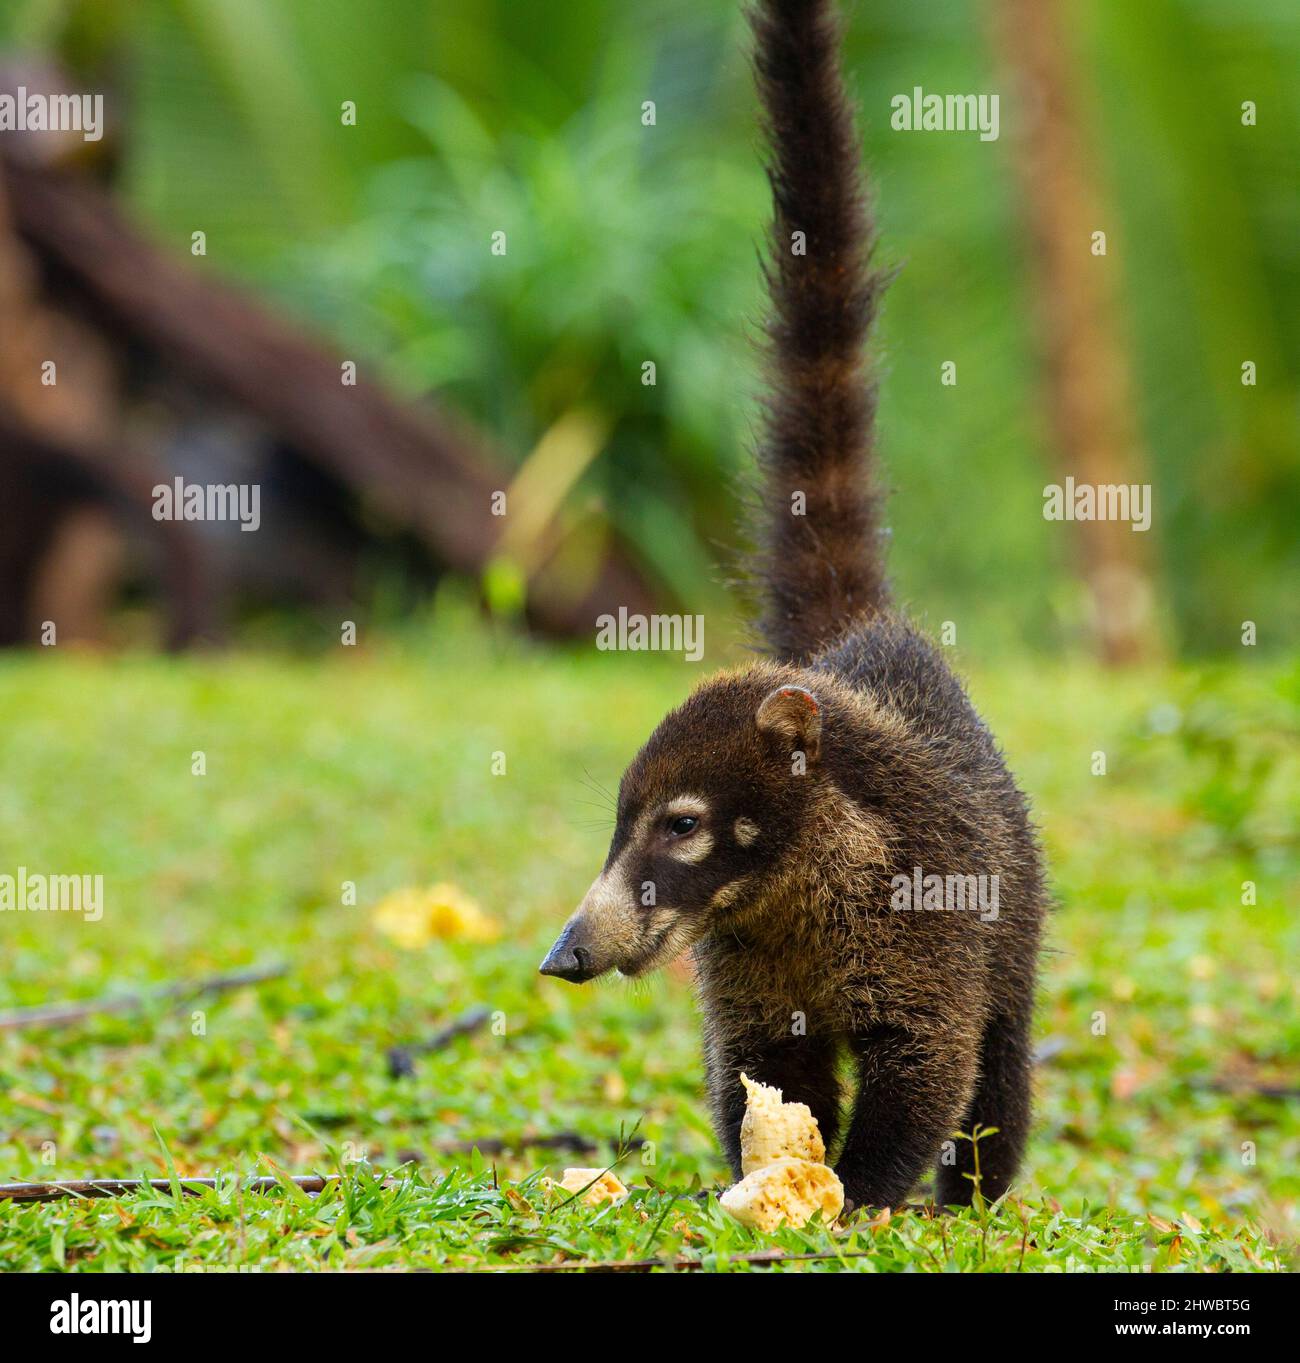 Coati à nez blanc (Nasua narica) manger une banane Banque D'Images